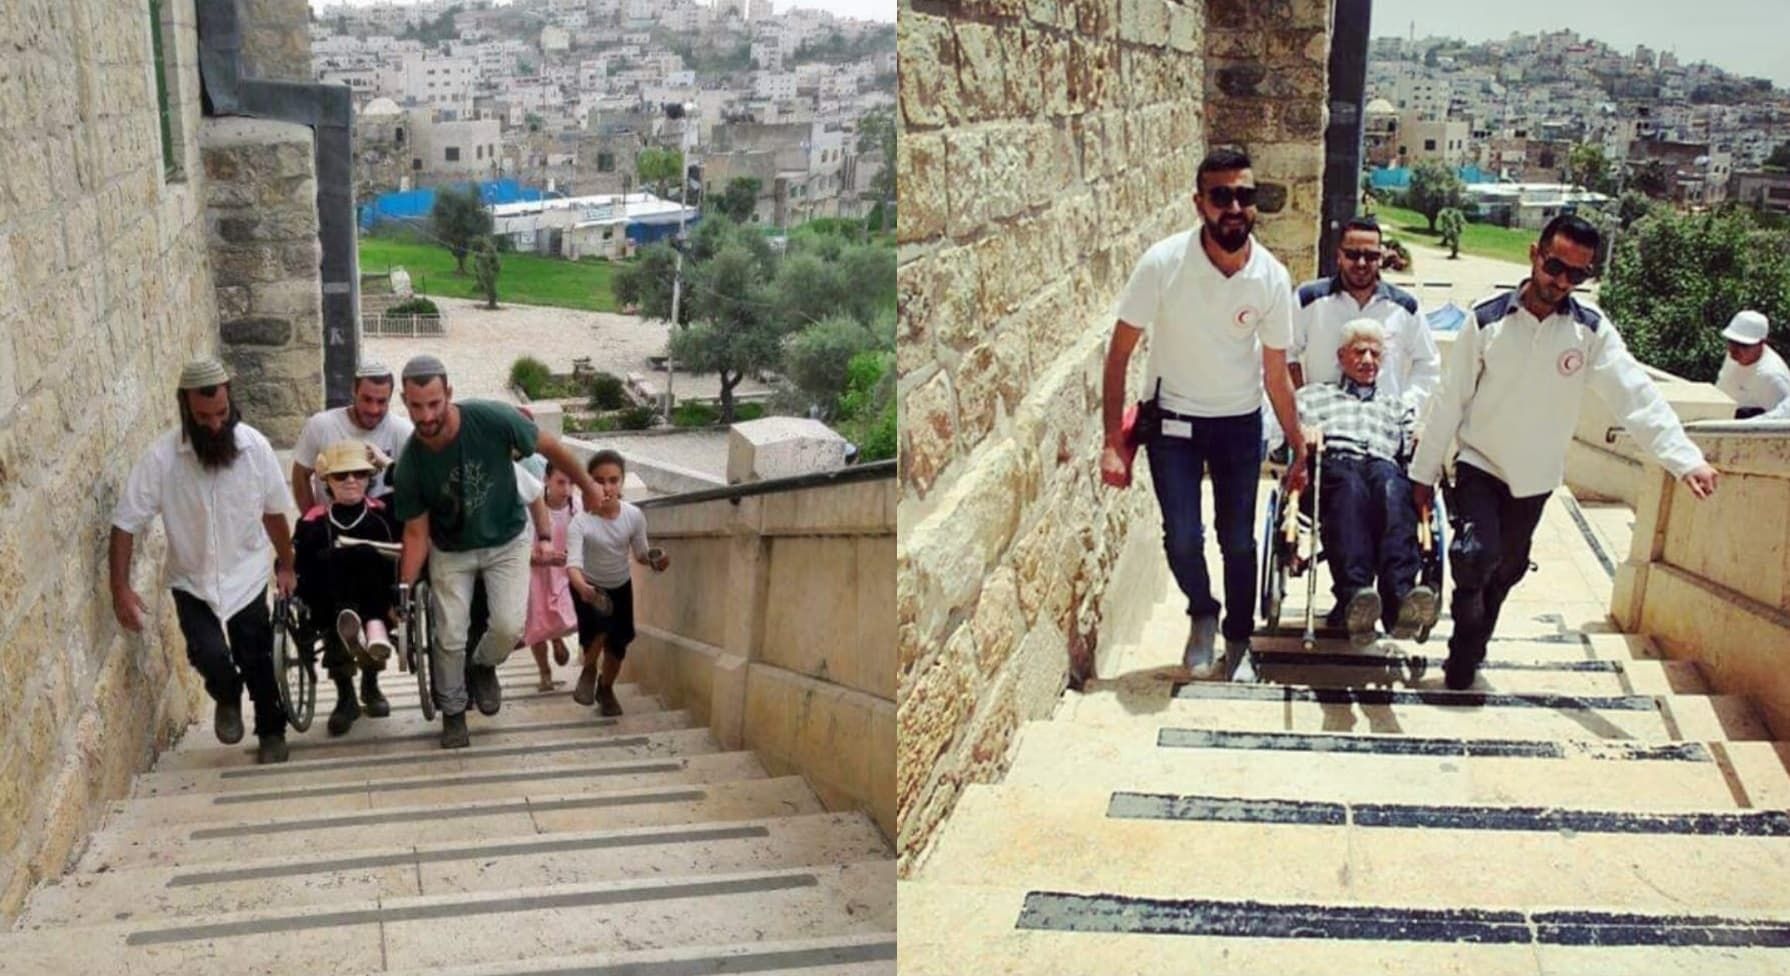 Wheelchair-bound Jewish pilgrim and wheelchair-bound Muslim pilgrim, each being carried up the stairs